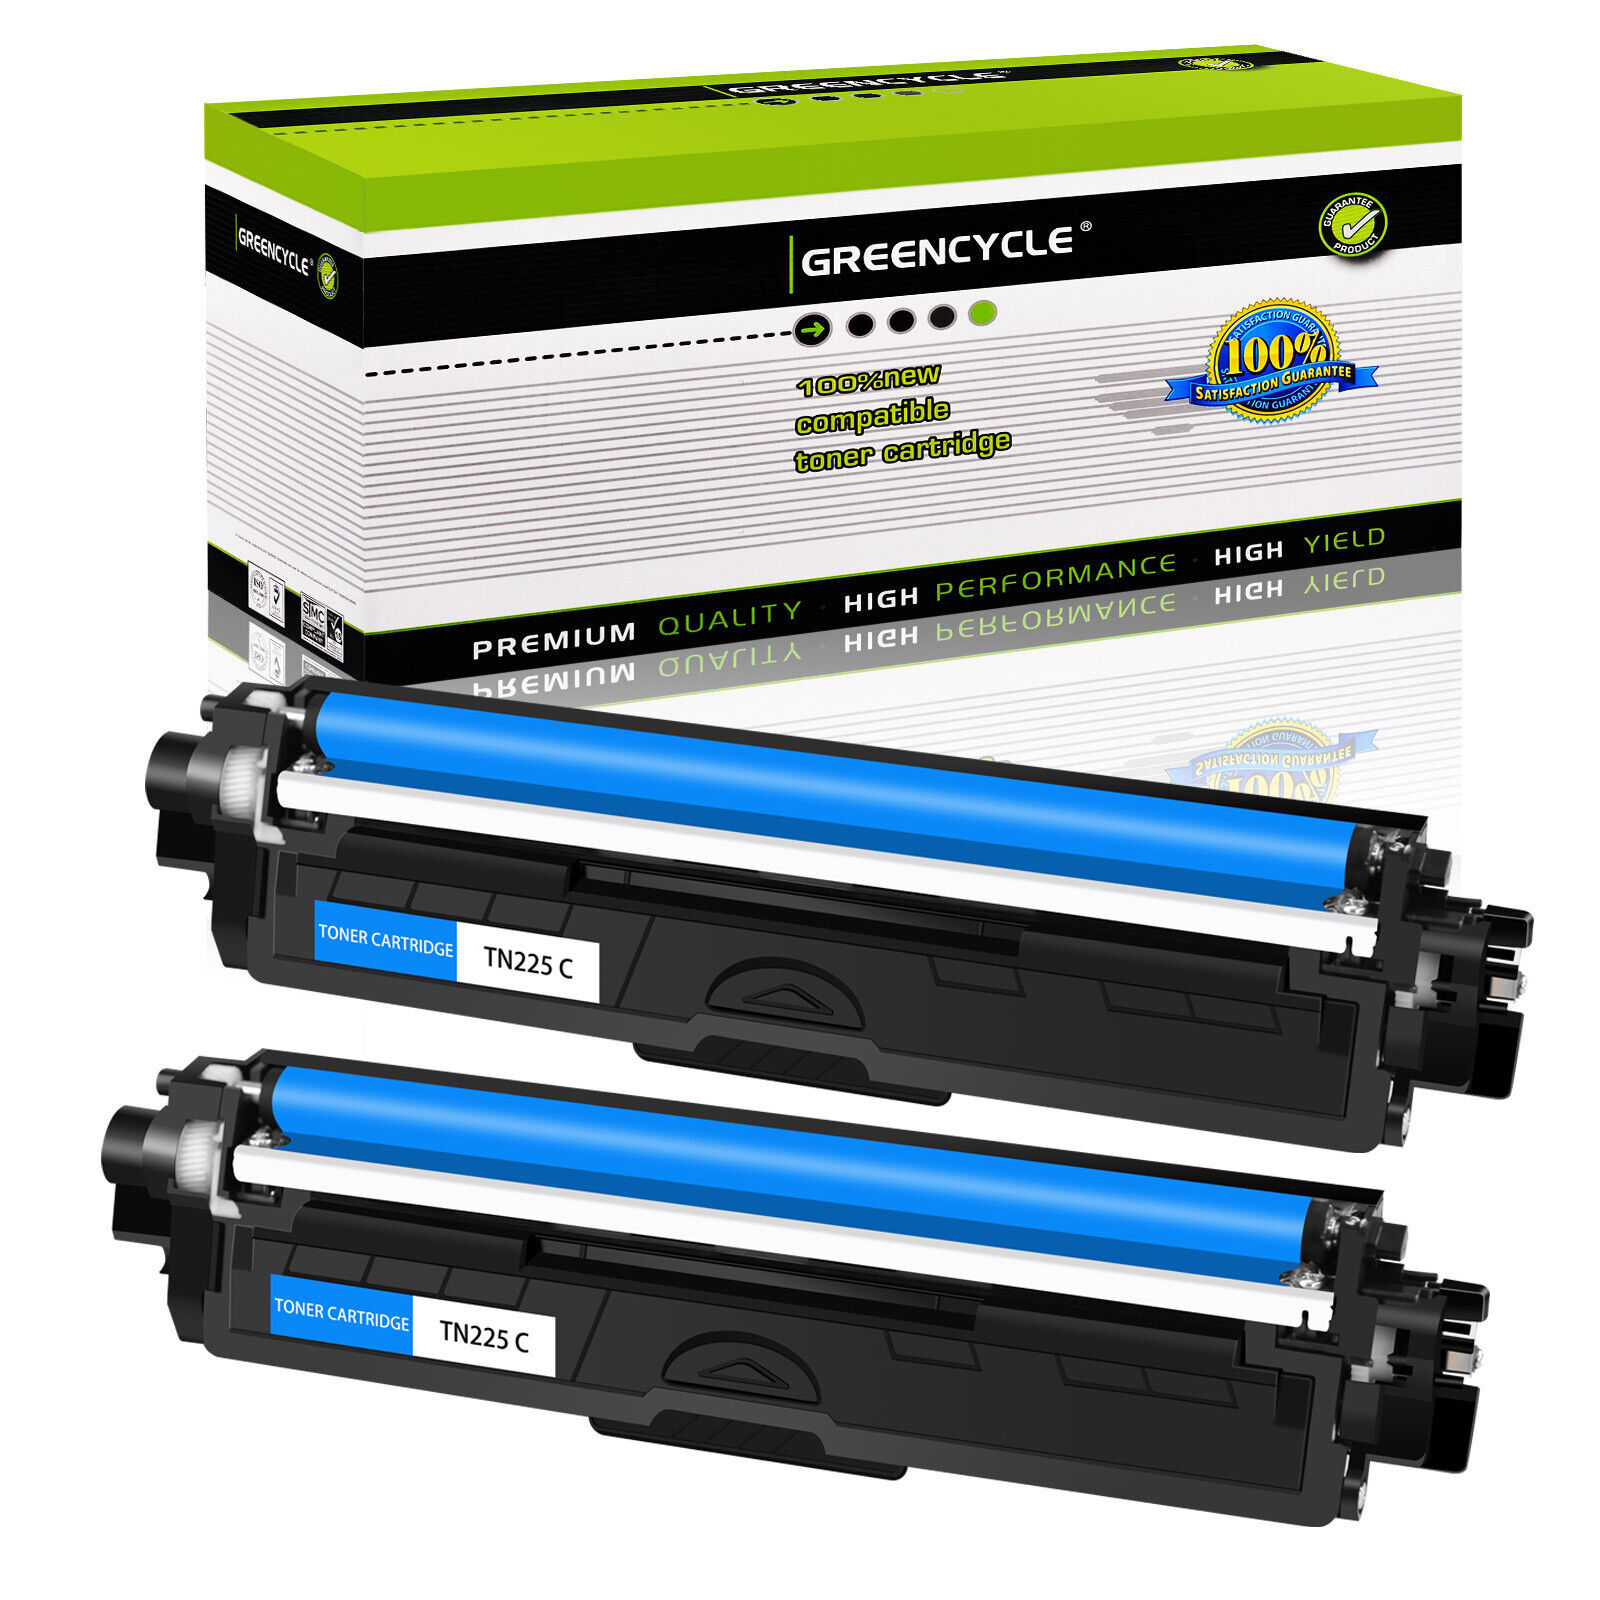 2PK TN221 Cyan Toner Cartridge Fits for Brother DCP-9020CDN DCP-9020CDW Printer